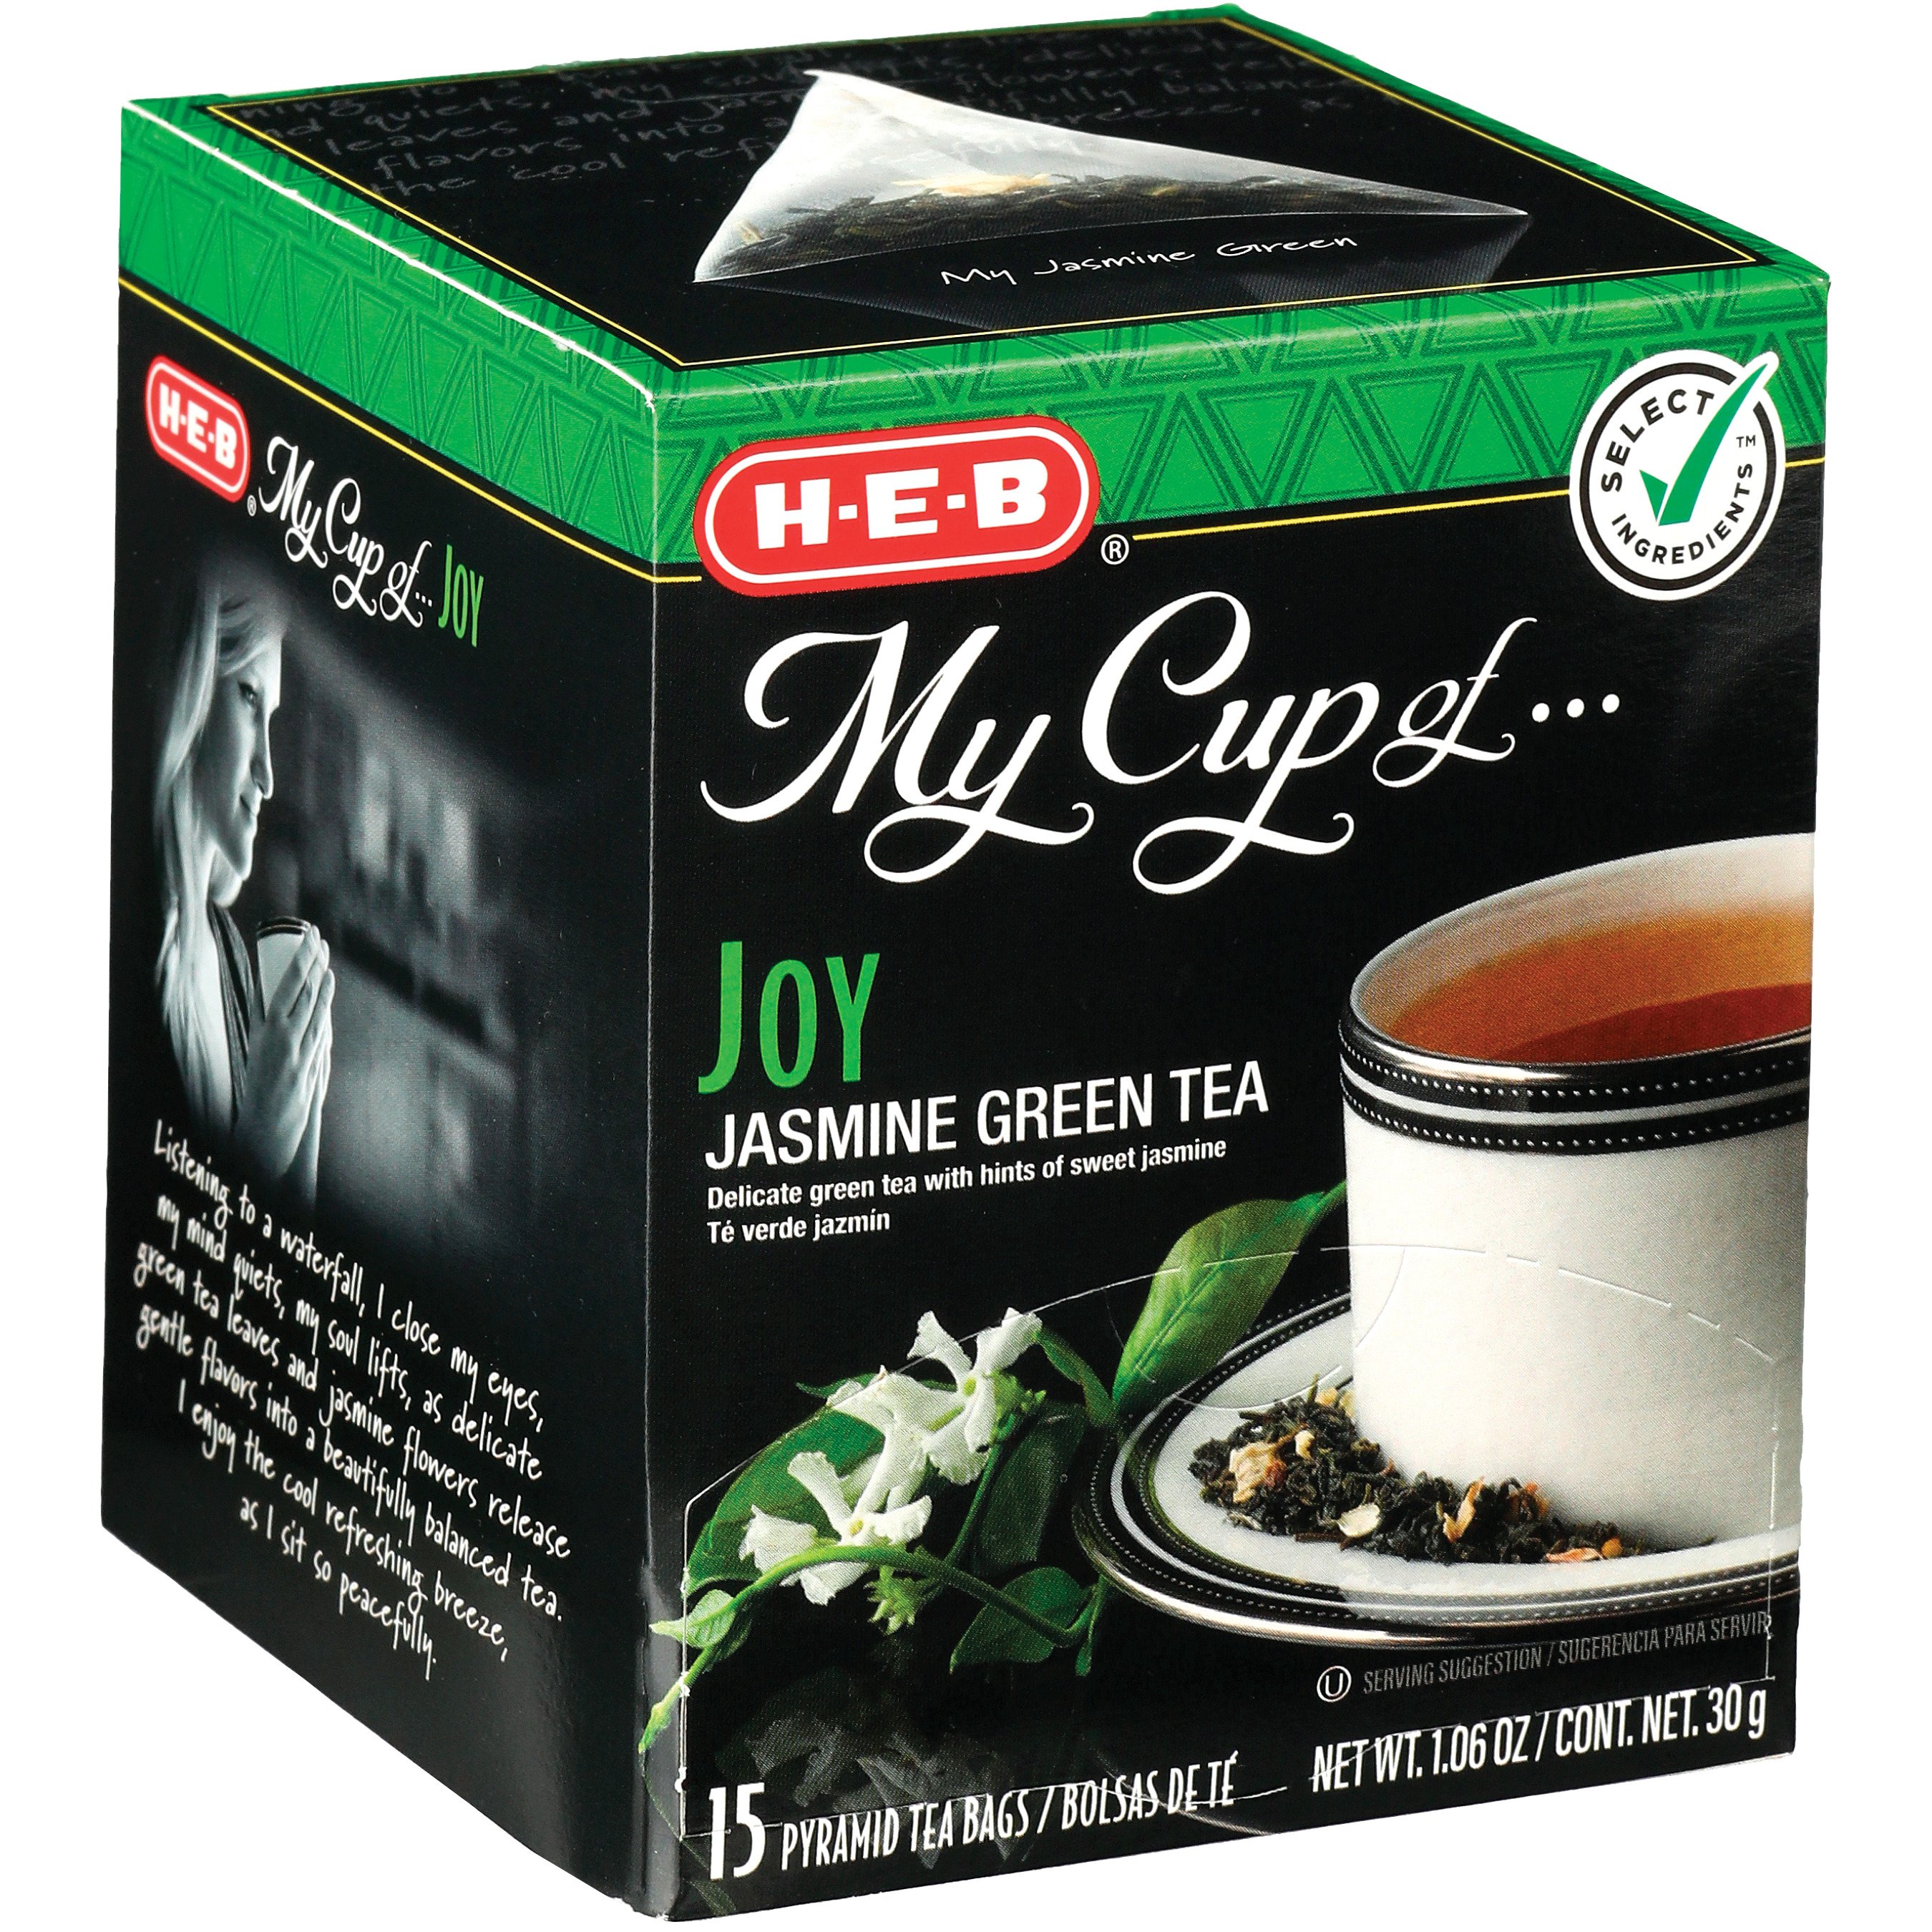 H-E-B My Cup of Joy Jasmine Green Tea, Pyramid Tea Bags - Shop Tea at H-E-B